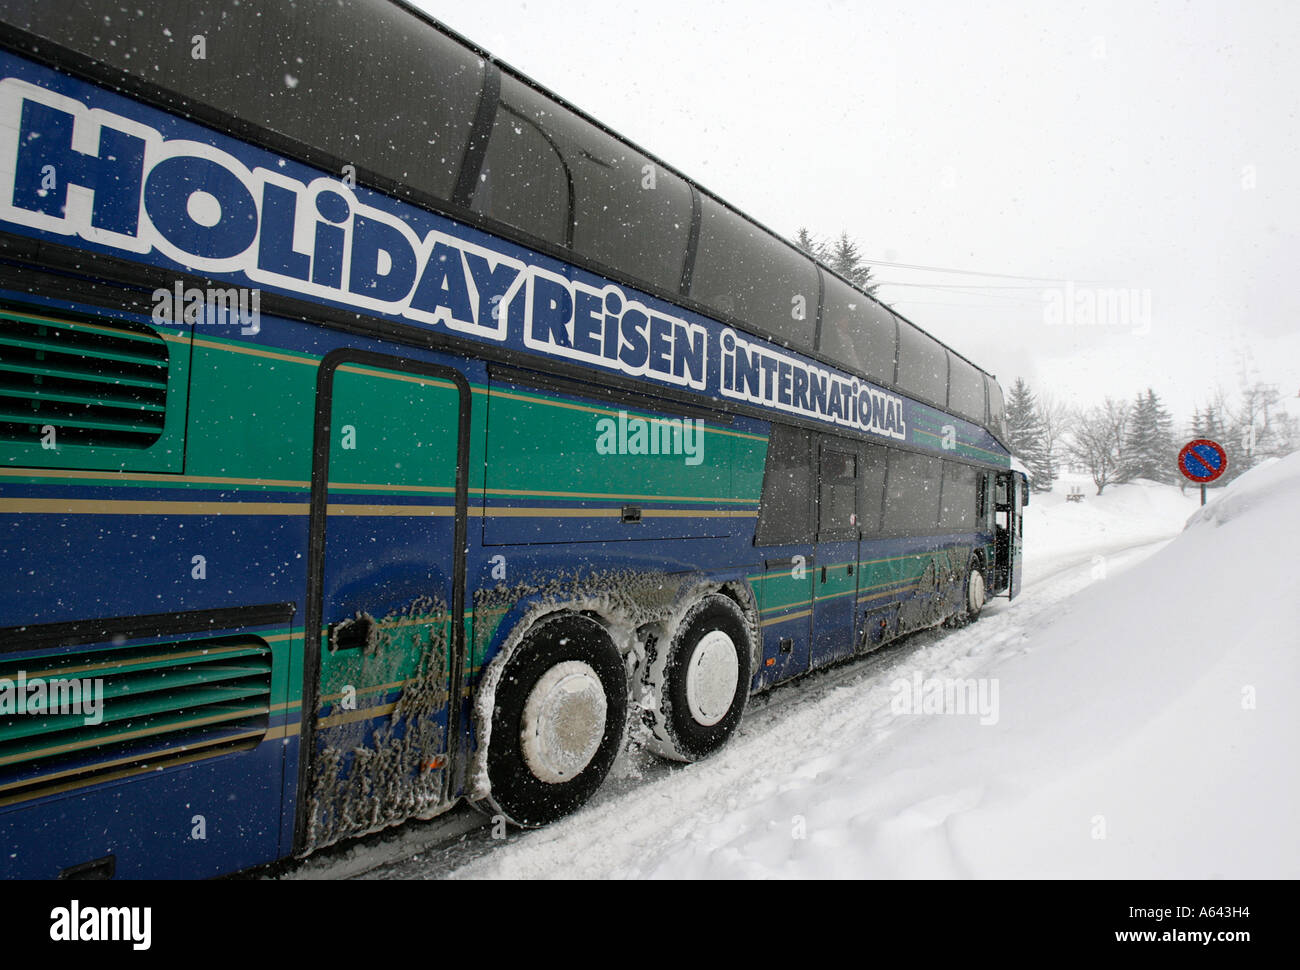 Big Holiday Reisen International coach in Oberwiesenthal, Erzgebirge, Erz  Ore Mountains, Saxony, Germany Stock Photo - Alamy